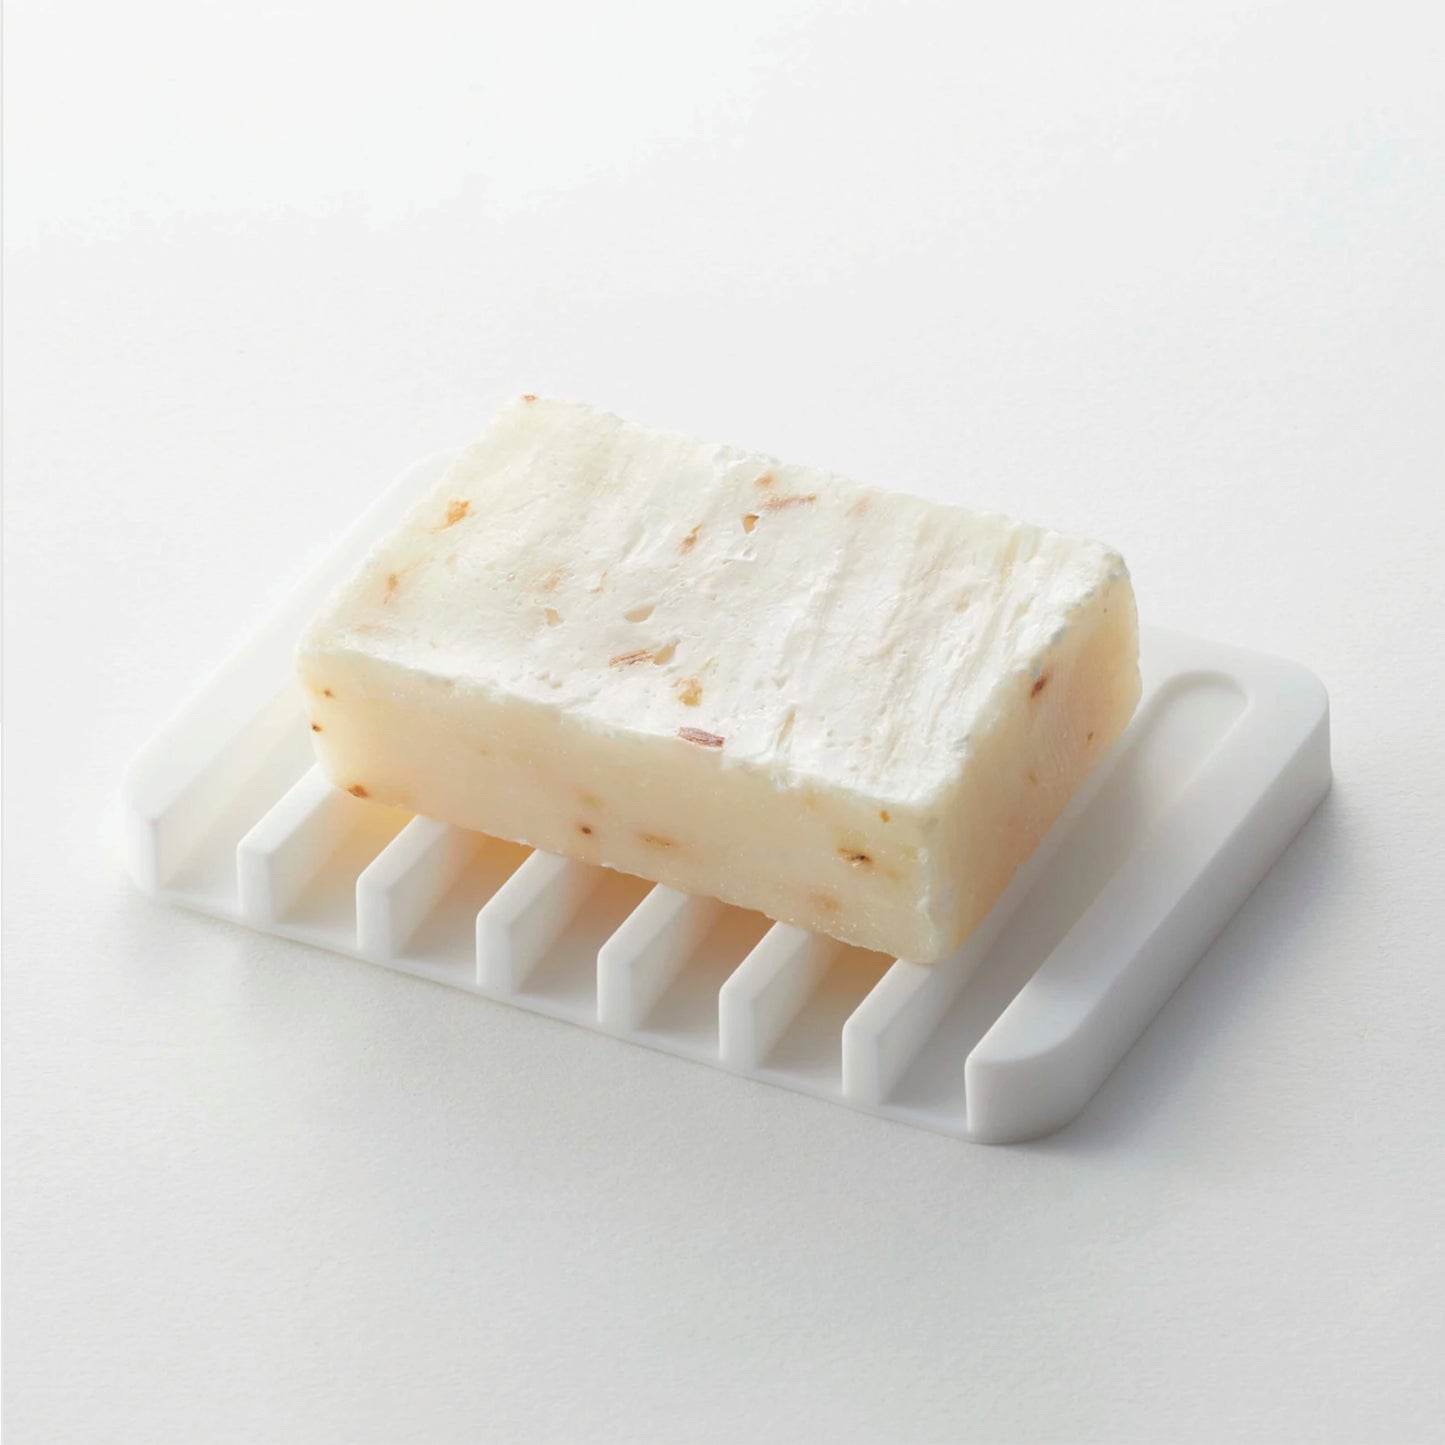 Yamazaki Flow Silicone Soap Tray in White